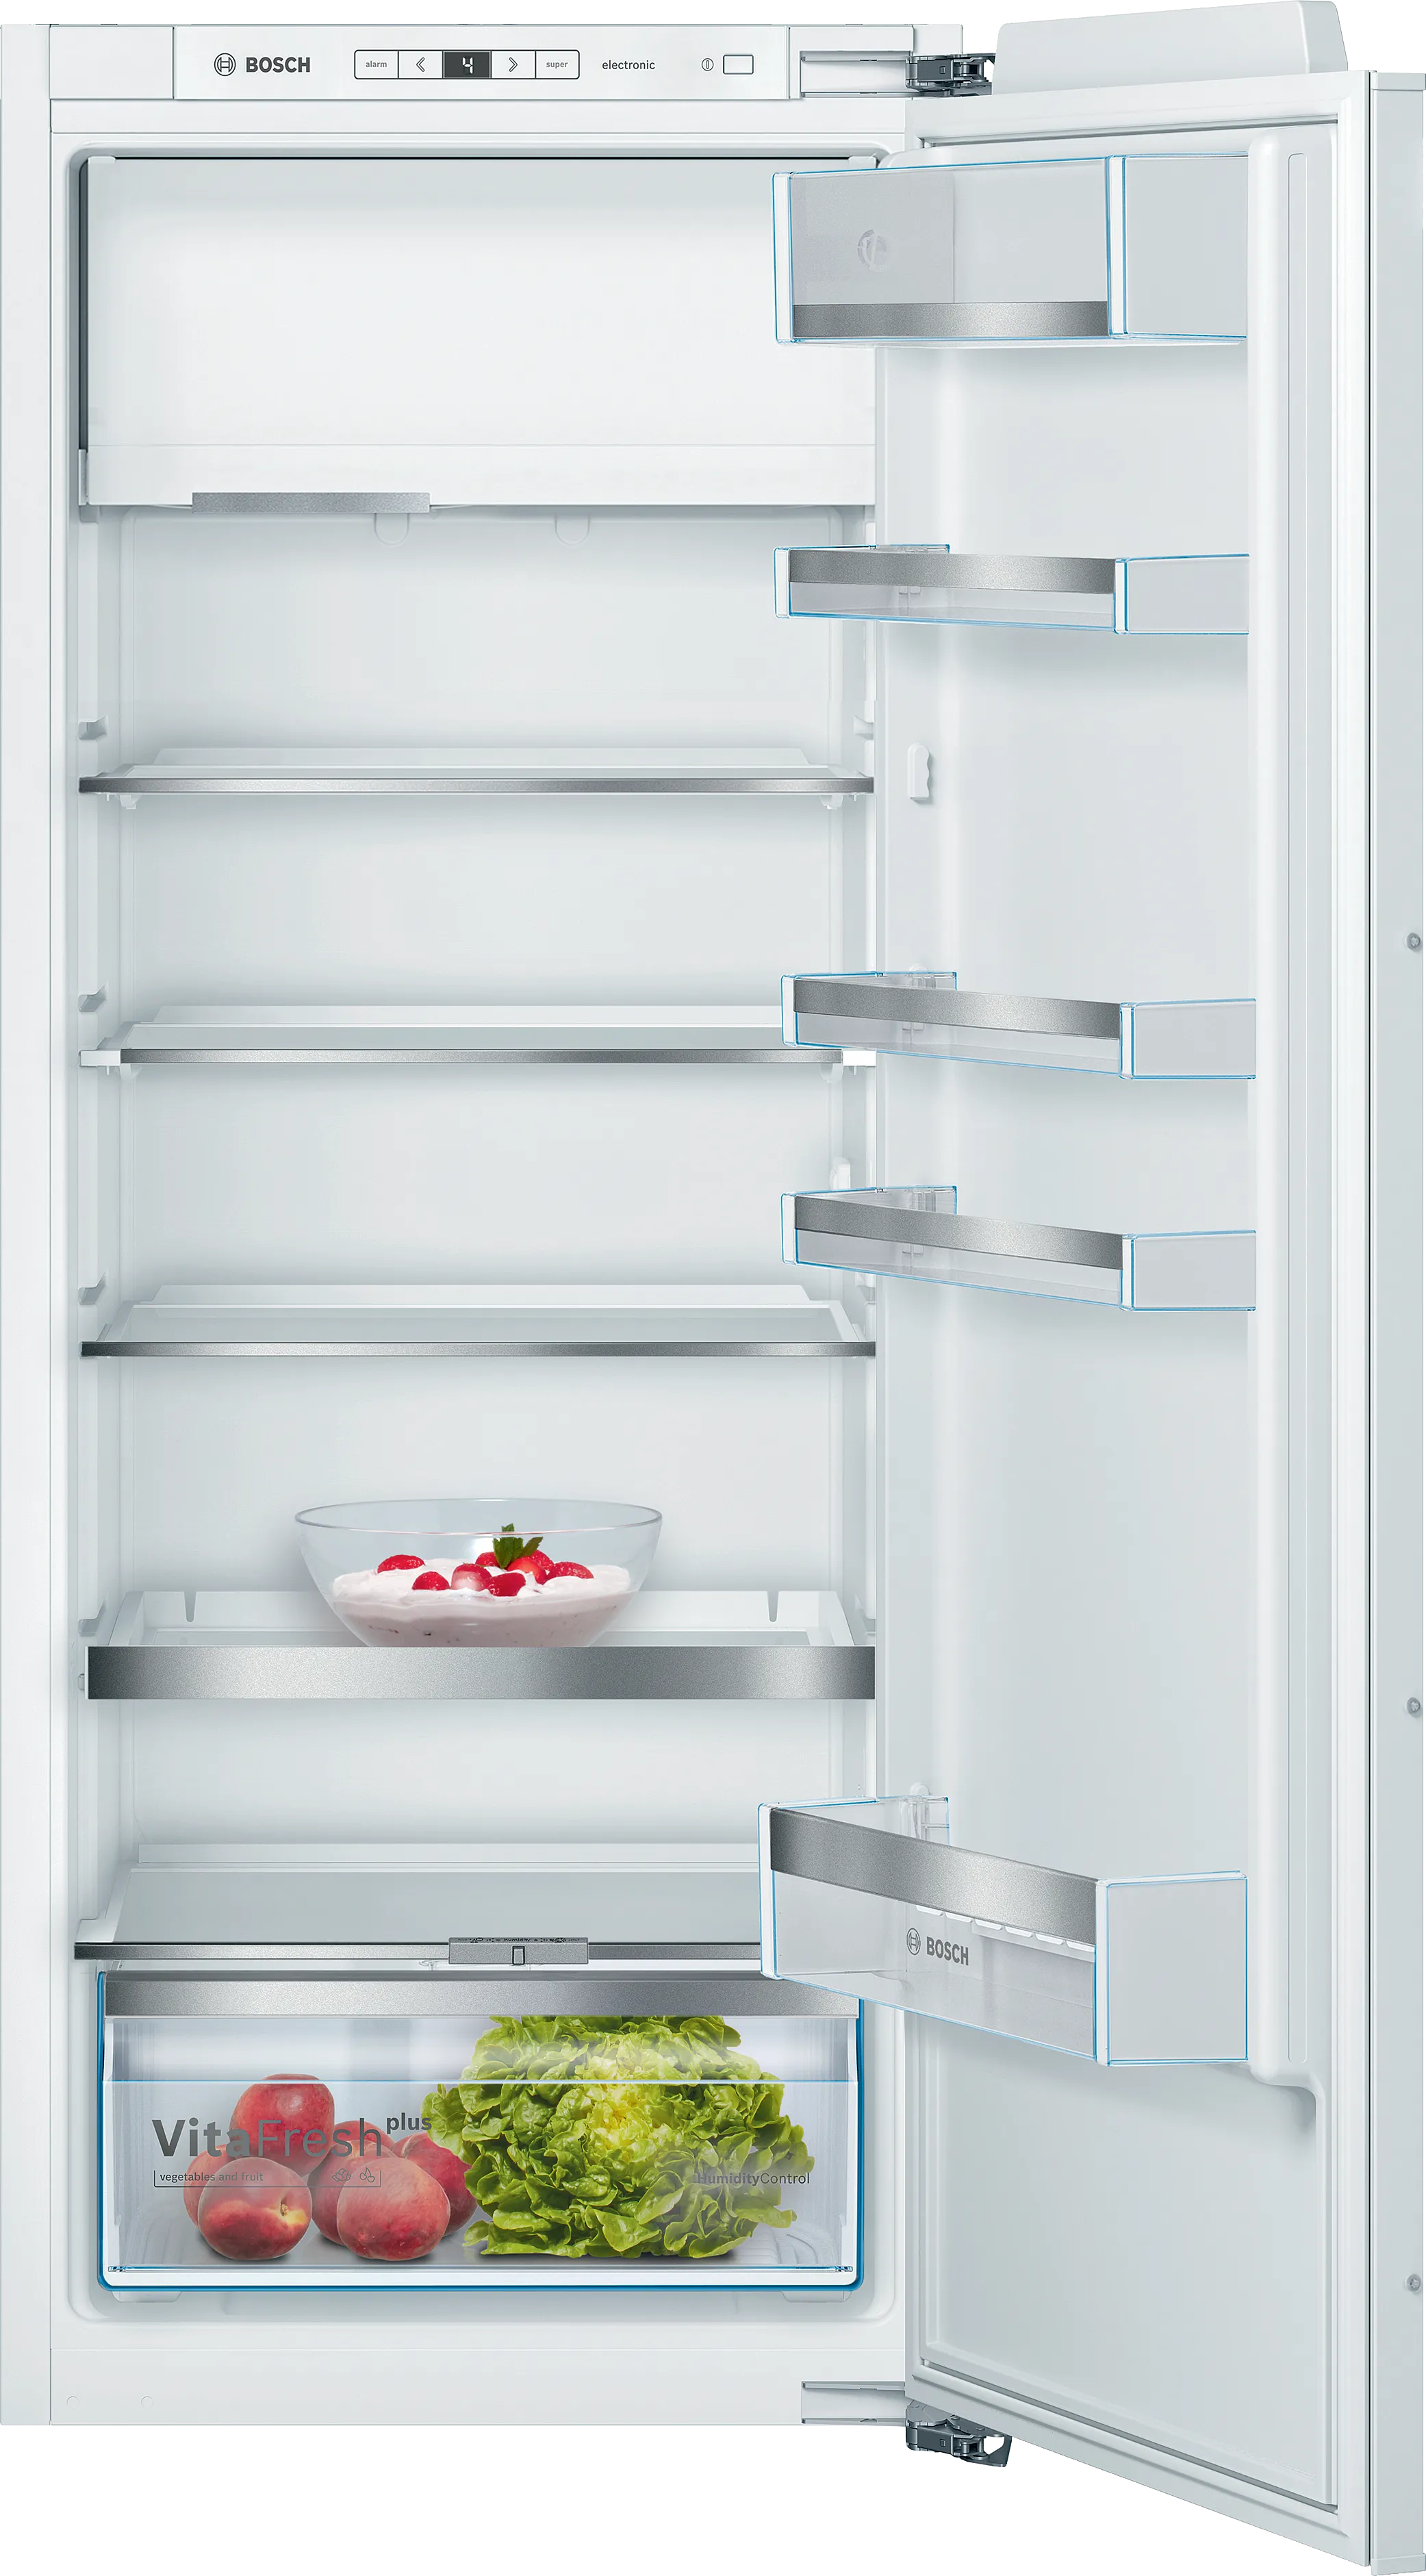 Series 6 built-in fridge with freezer section 140 x 56 cm flat hinge 